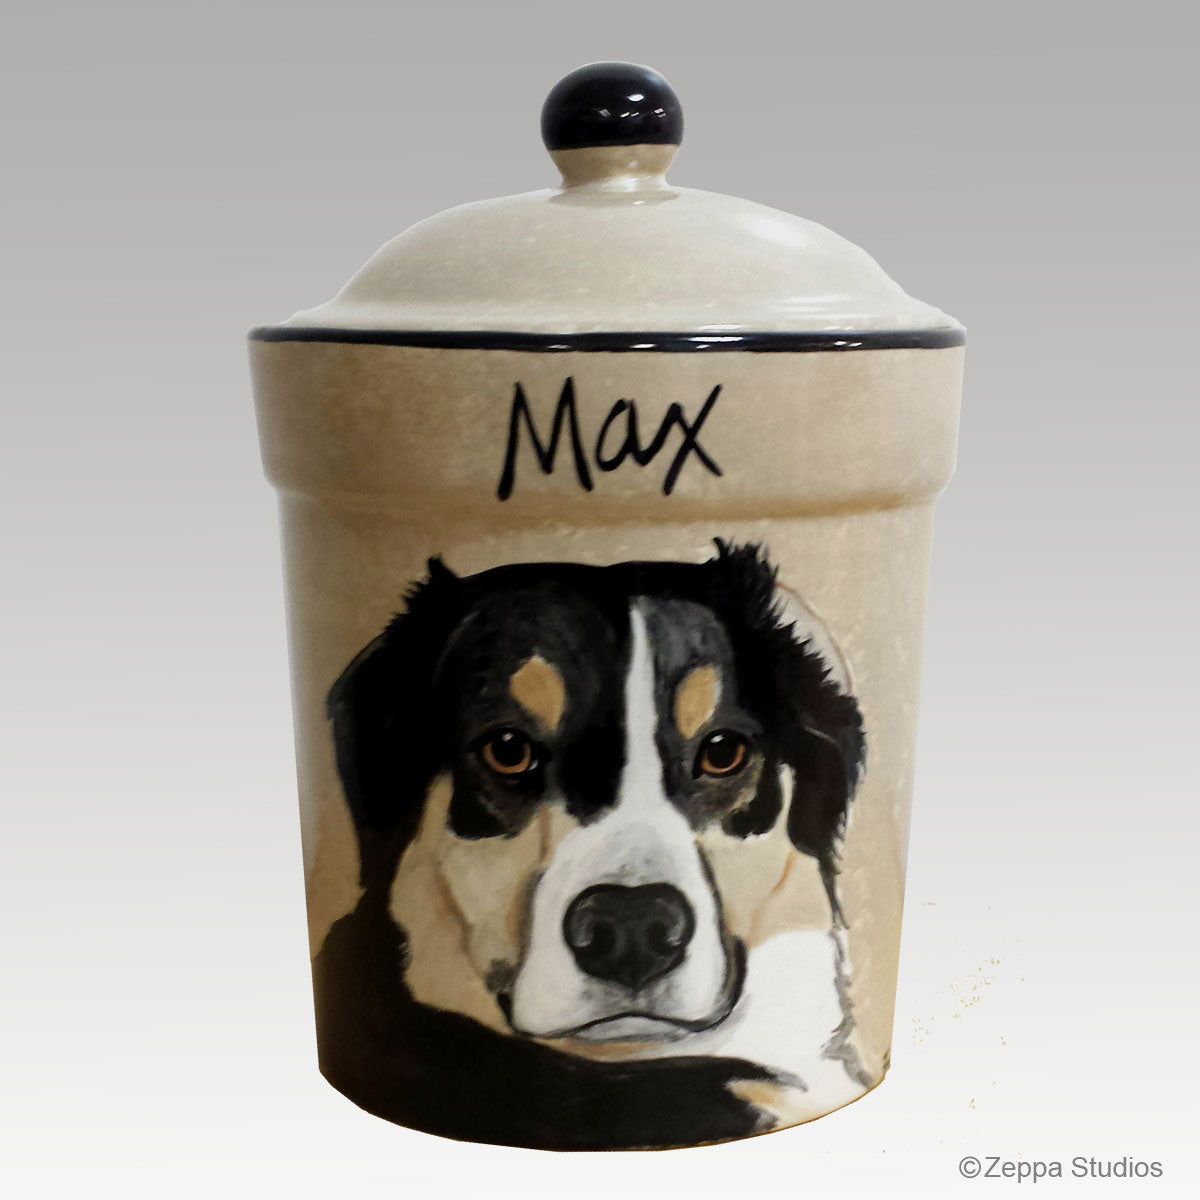 Custom Hand Painted Ceramic Treat Jar, "Max" by Zeppa Studios